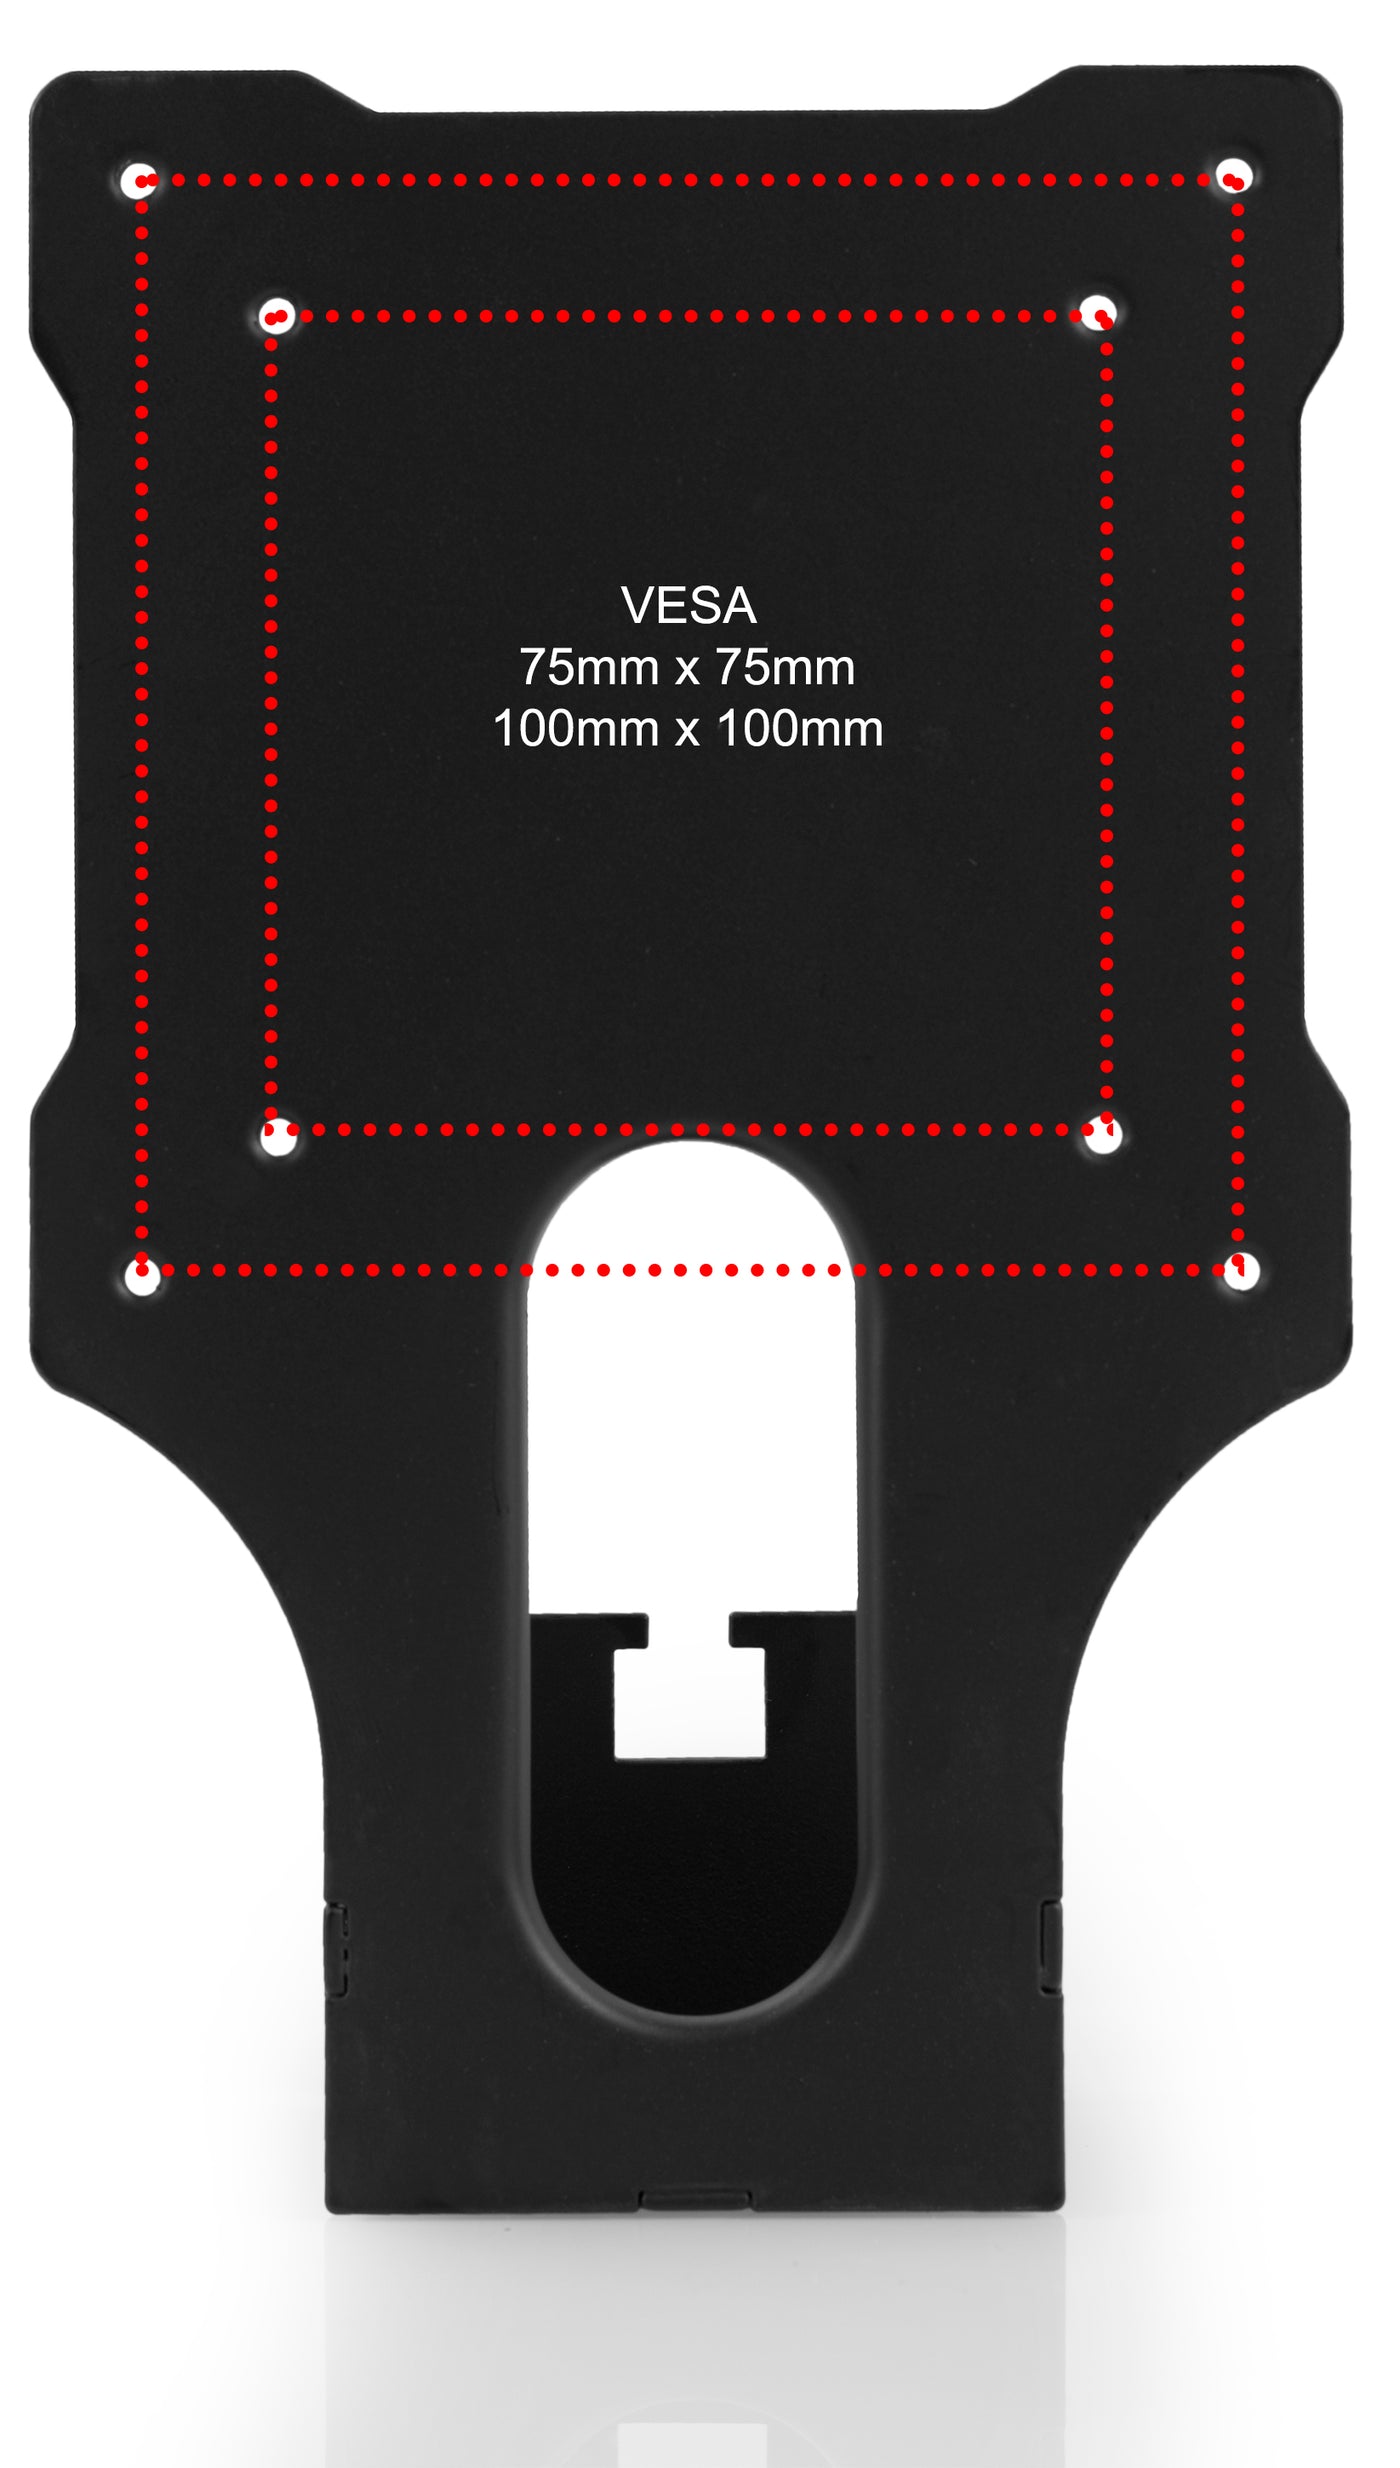 VESA Adapter for Compatible Dell Monitors – VIVO - desk solutions, screen  mounting, and more